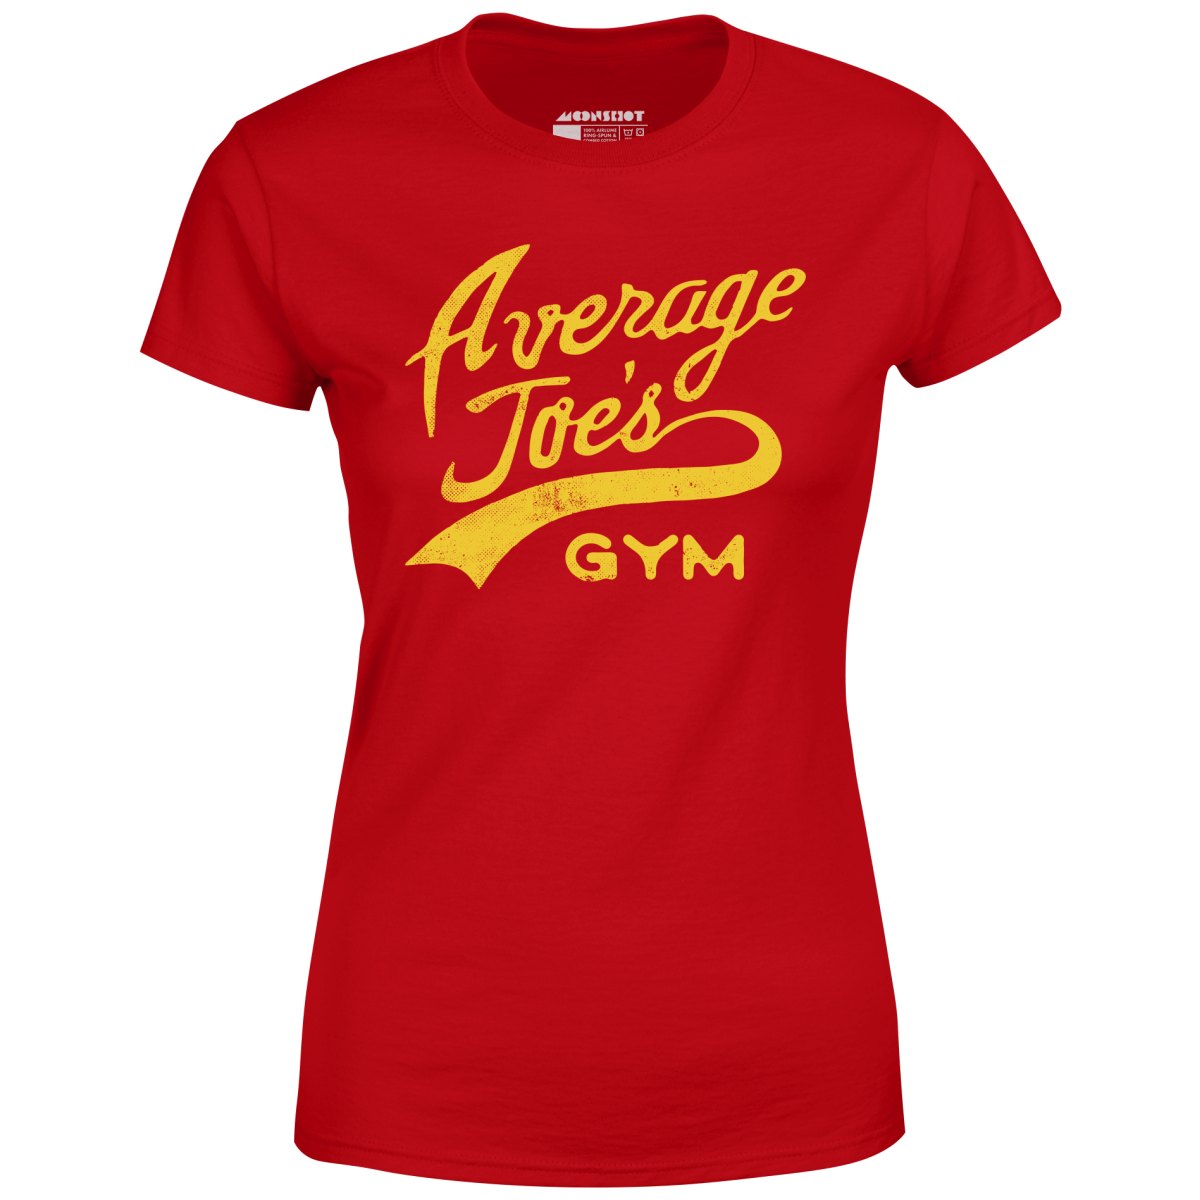 Average Joe's Gym - Women's T-Shirt